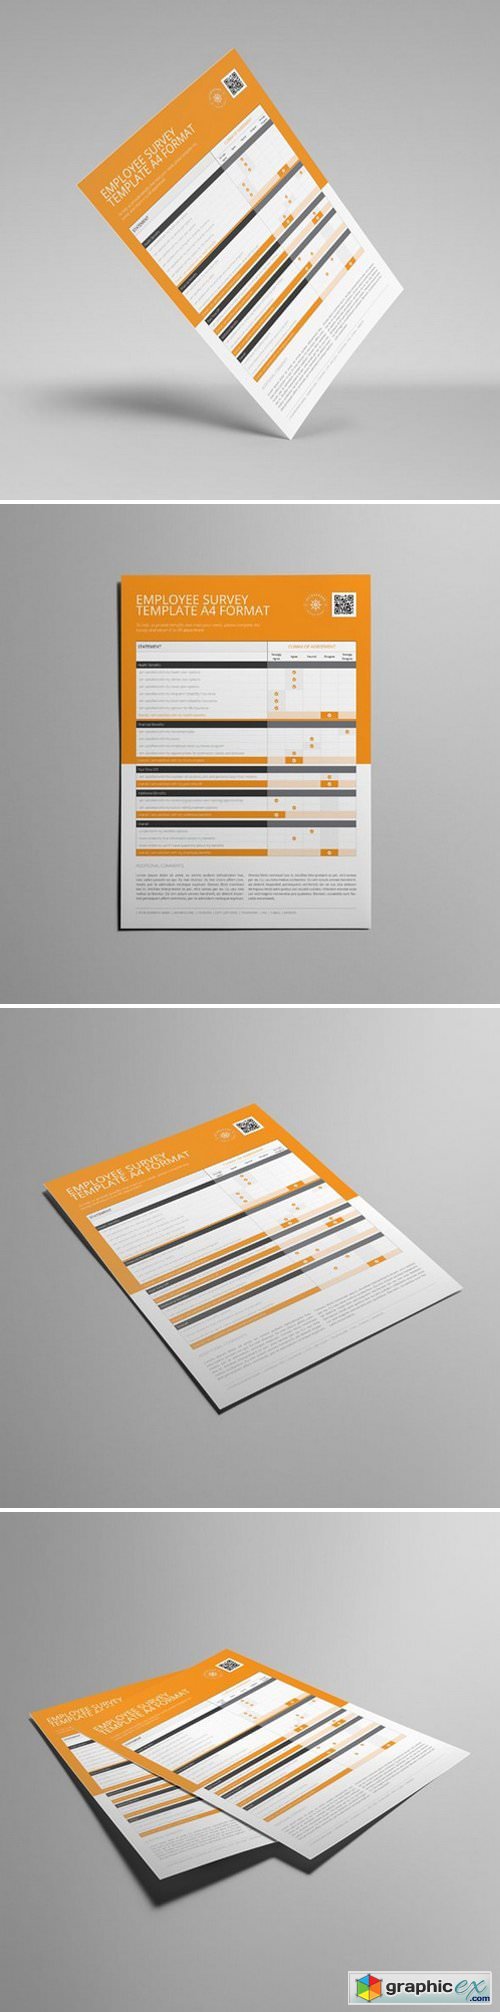 KeBoto - Employee Survey Template A4 Format 000129